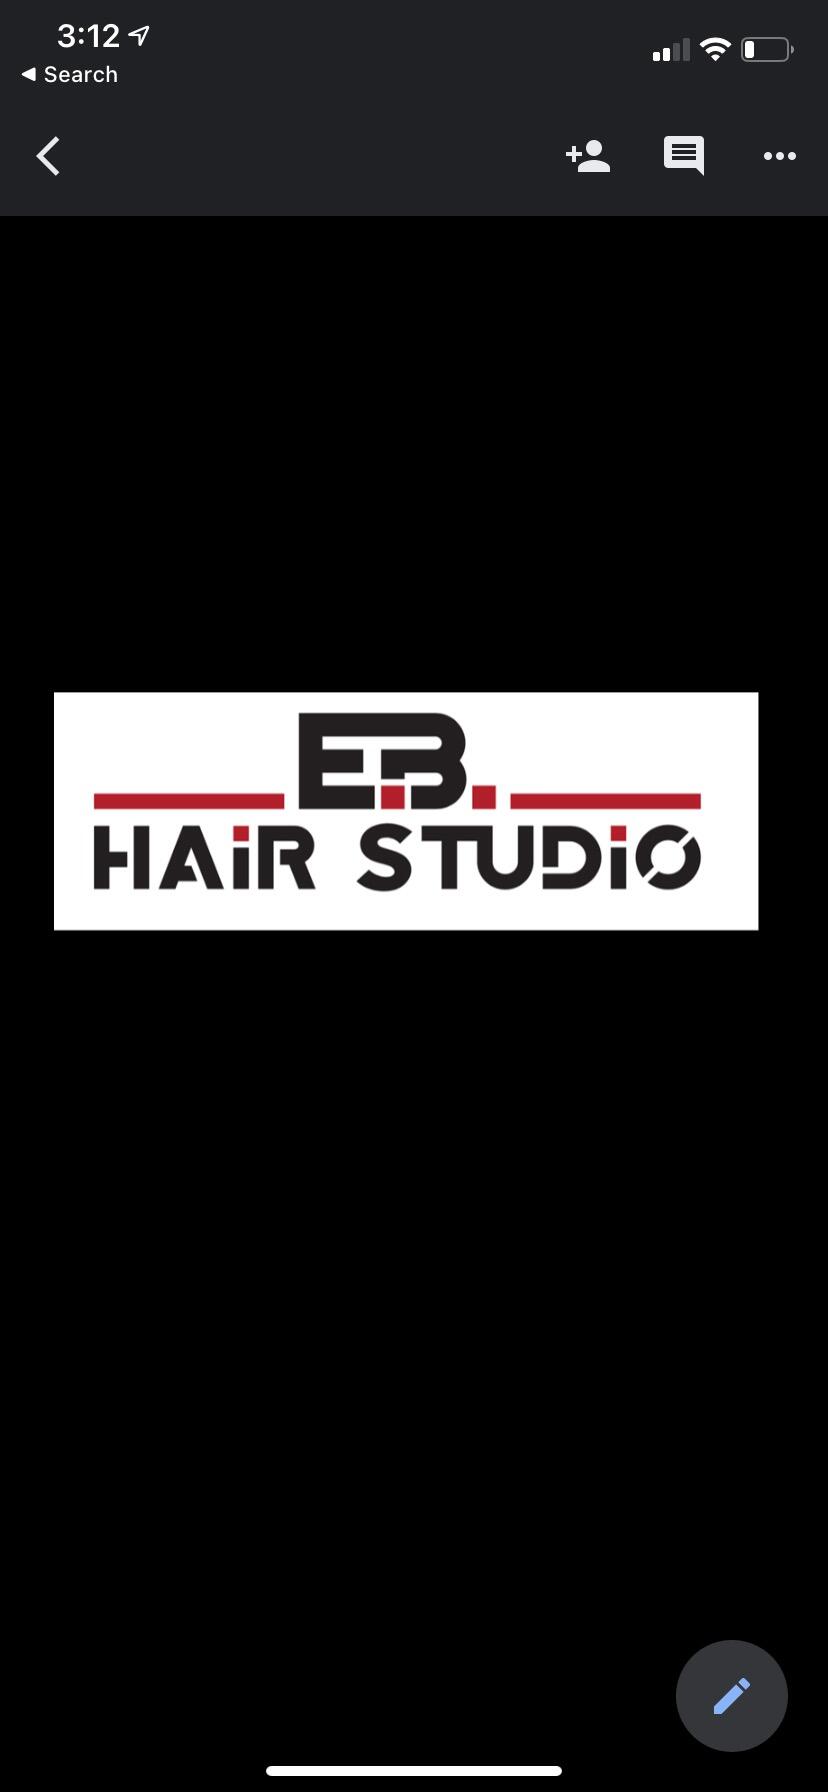 . Hair Studio - Concord, NC - Nextdoor